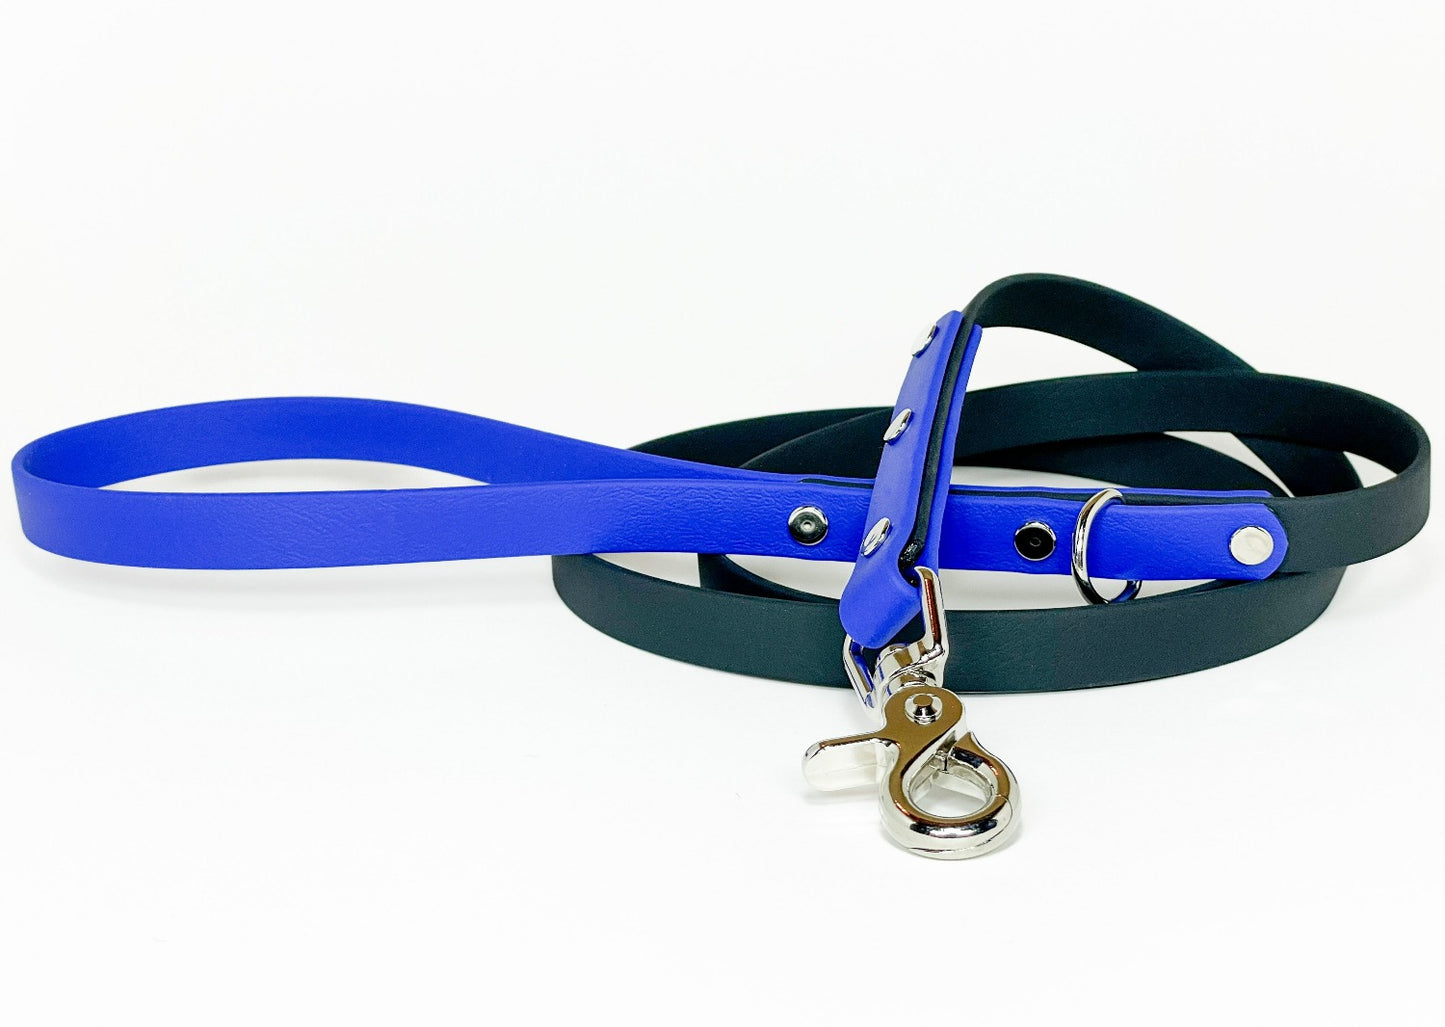 backwoods dog biothane waterproof two tone dog leash in blue and black